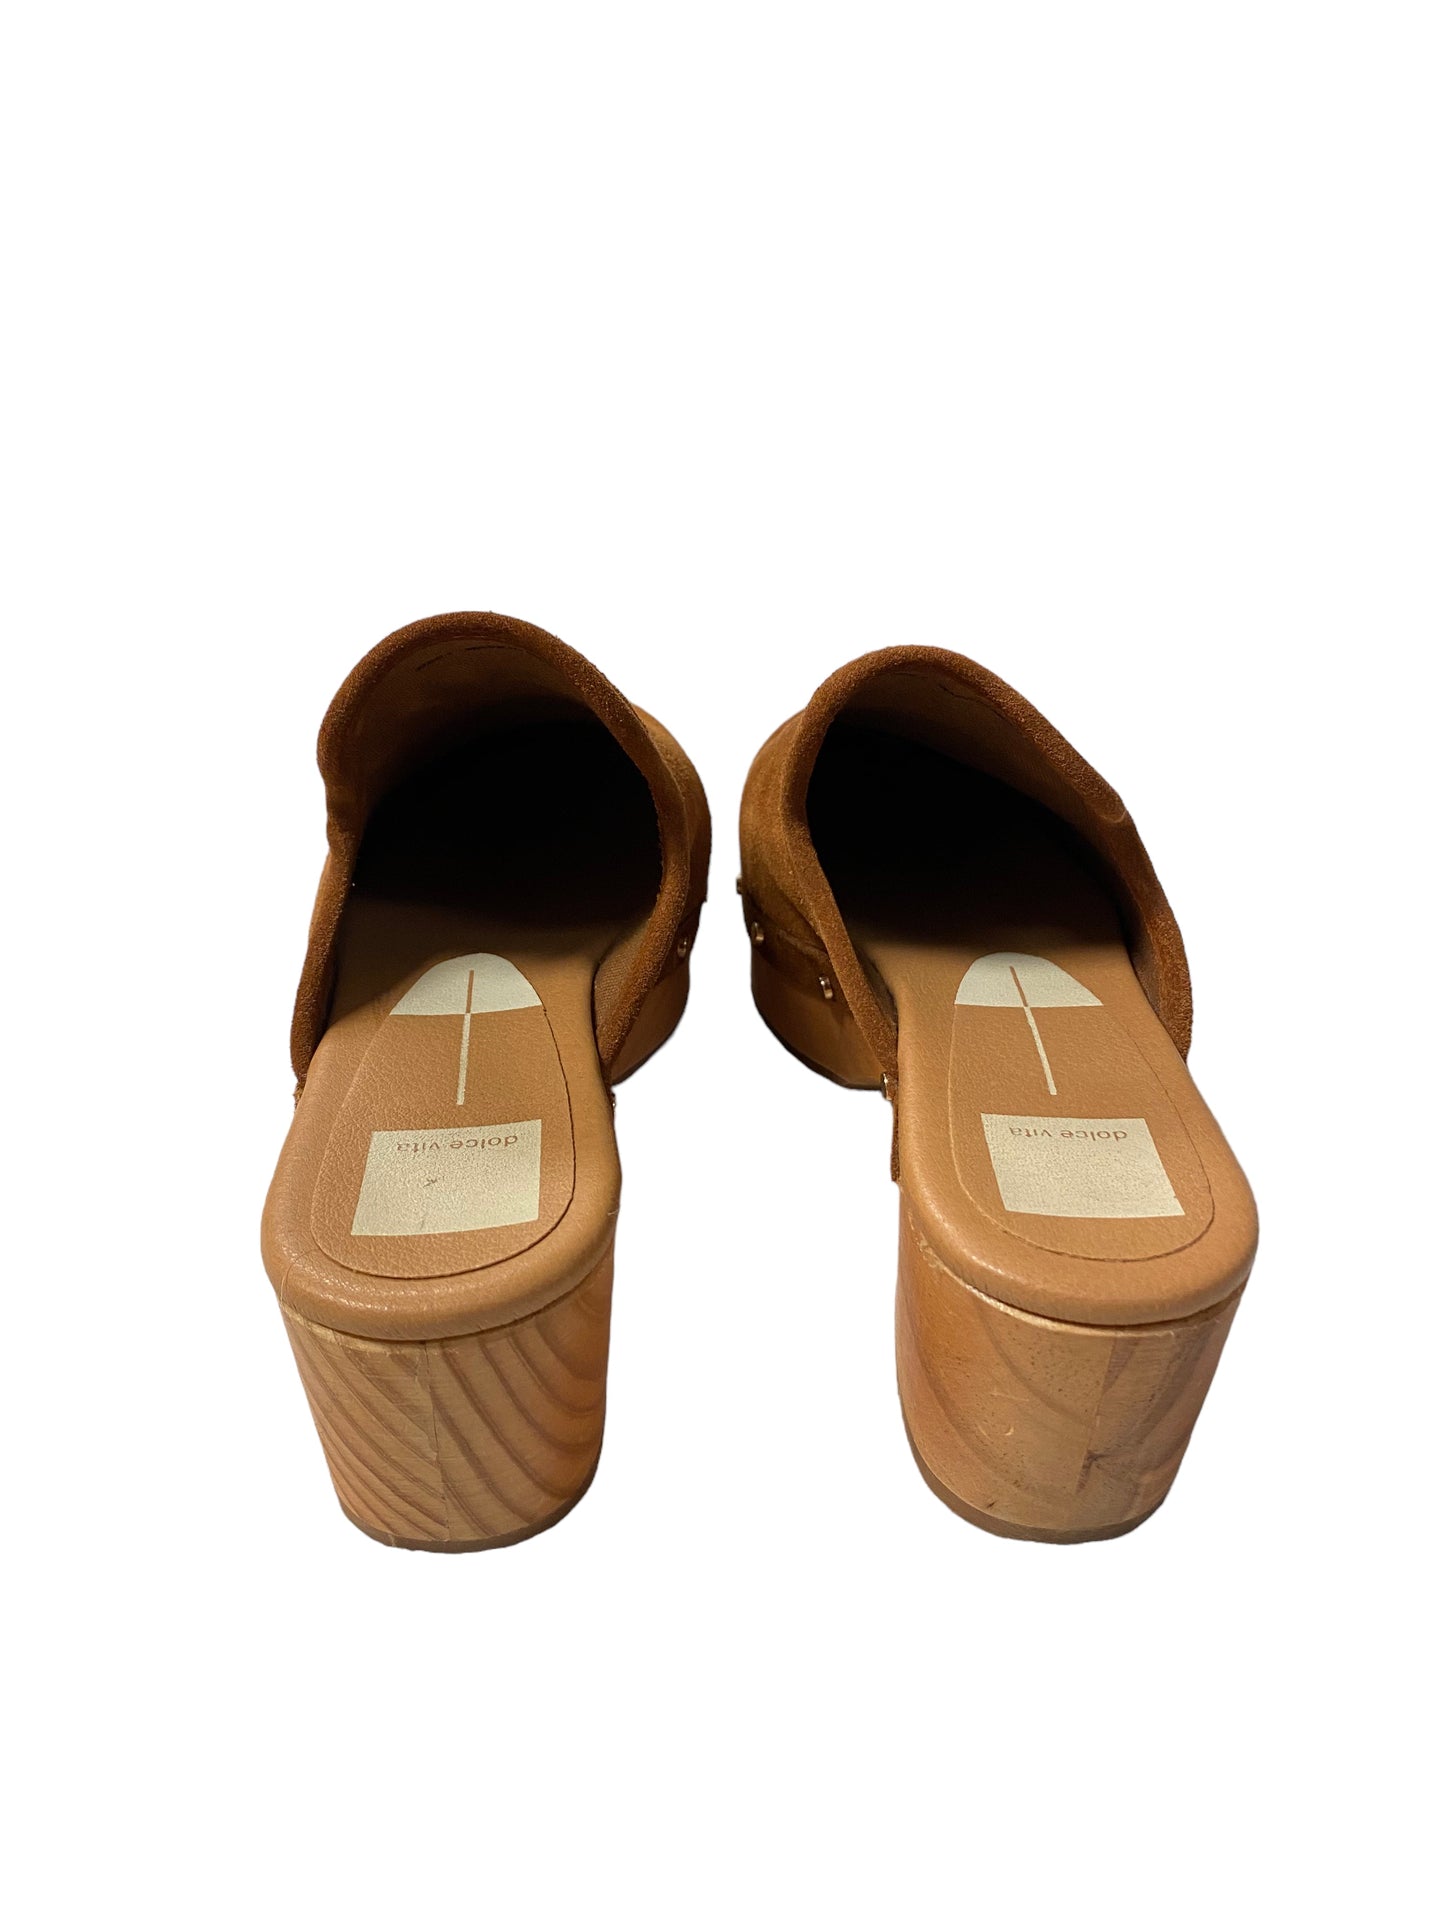 Brown Shoes Heels Block Dolce Vita, Size 7